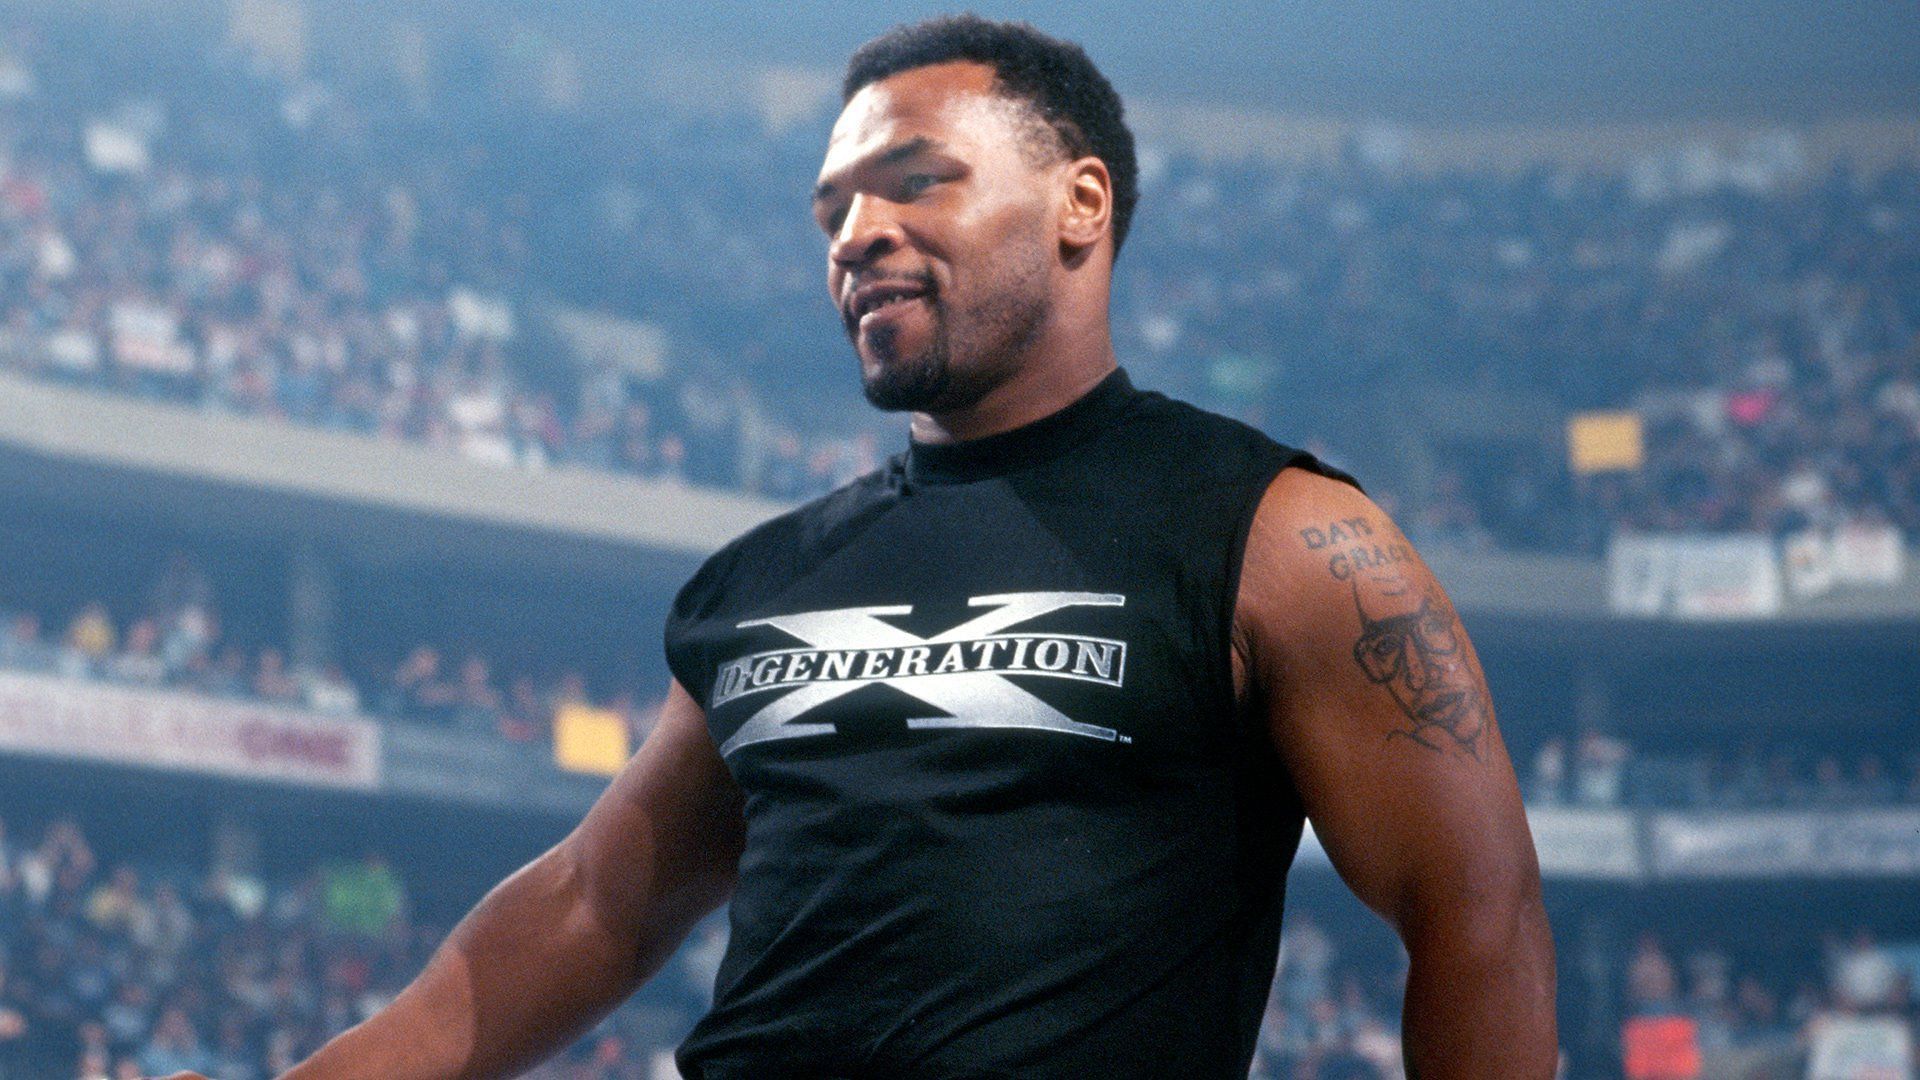 Mike Tyson wears a DX t-shirt on WWE RAW